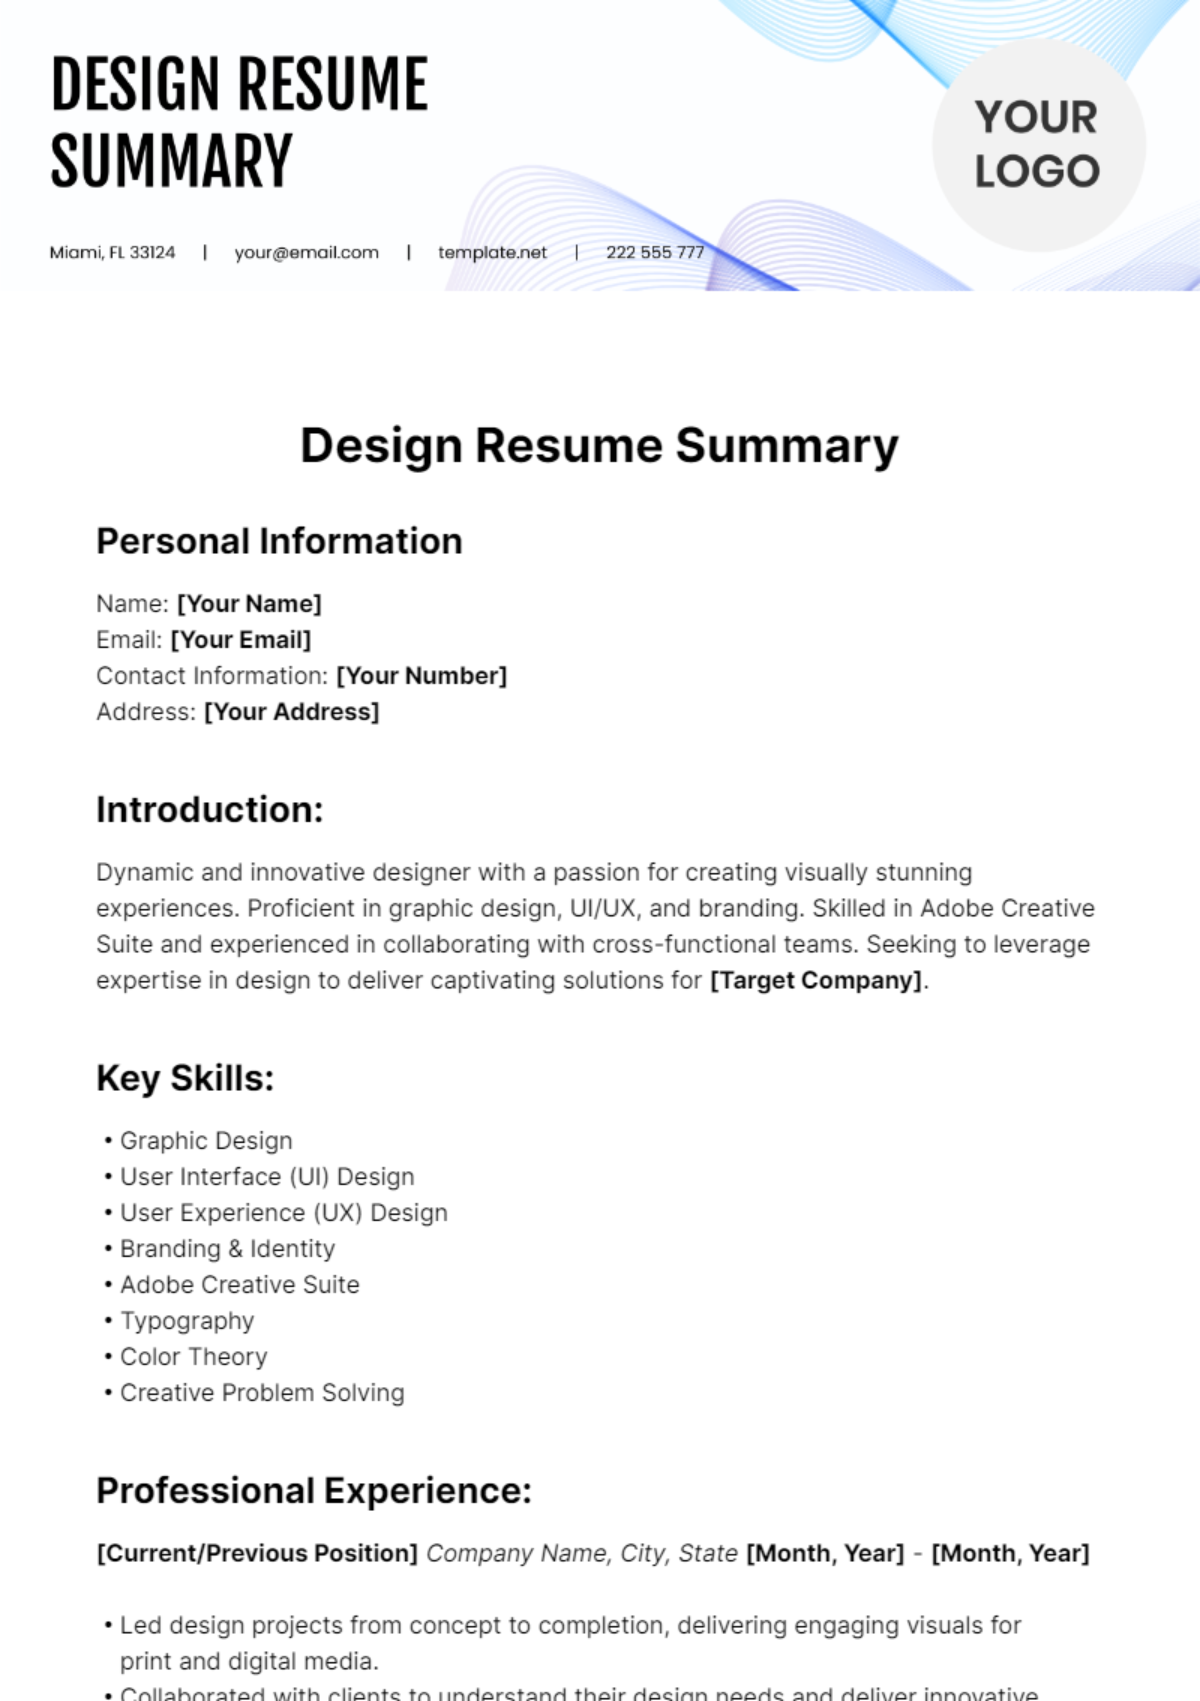 Design Resume Summary Template